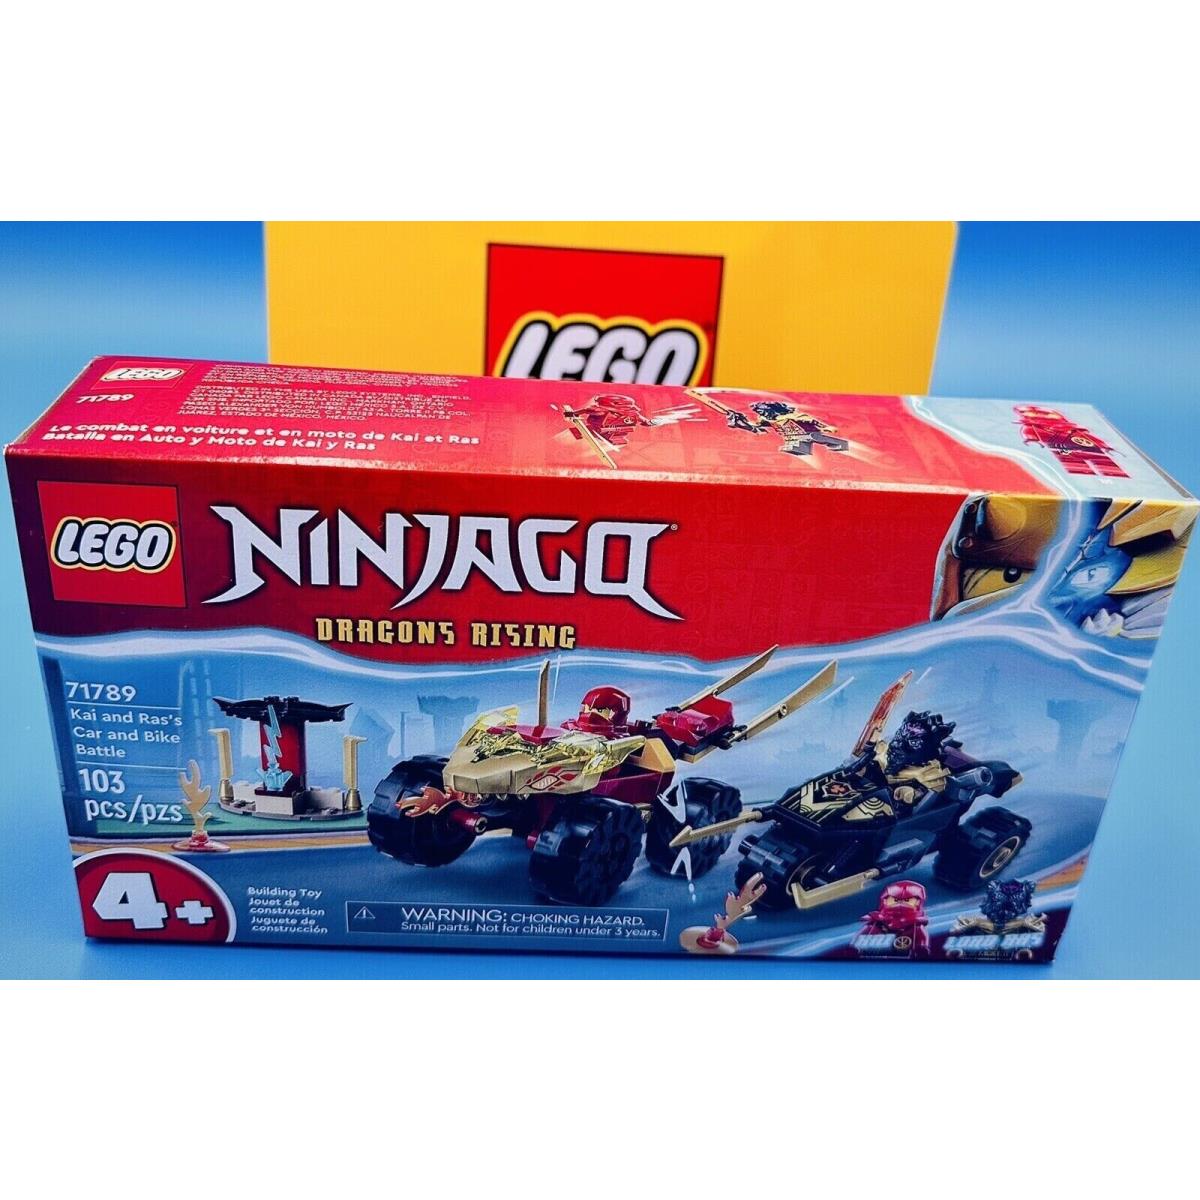 Lego Ninjago Kai and Ras Car and Bike Battle 71789